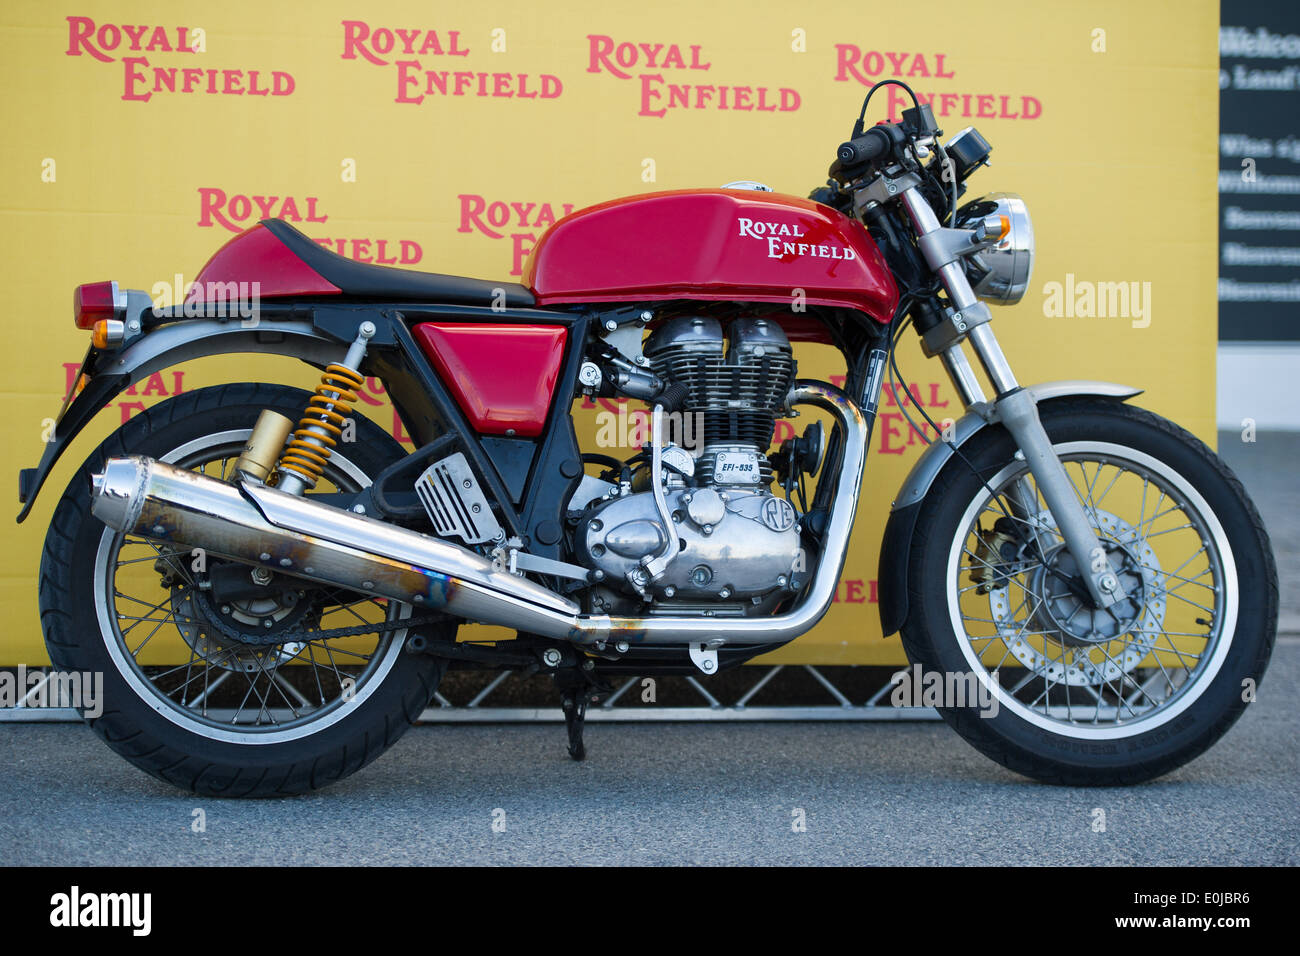 A Royal Enfield motorcycle. Stock Photo